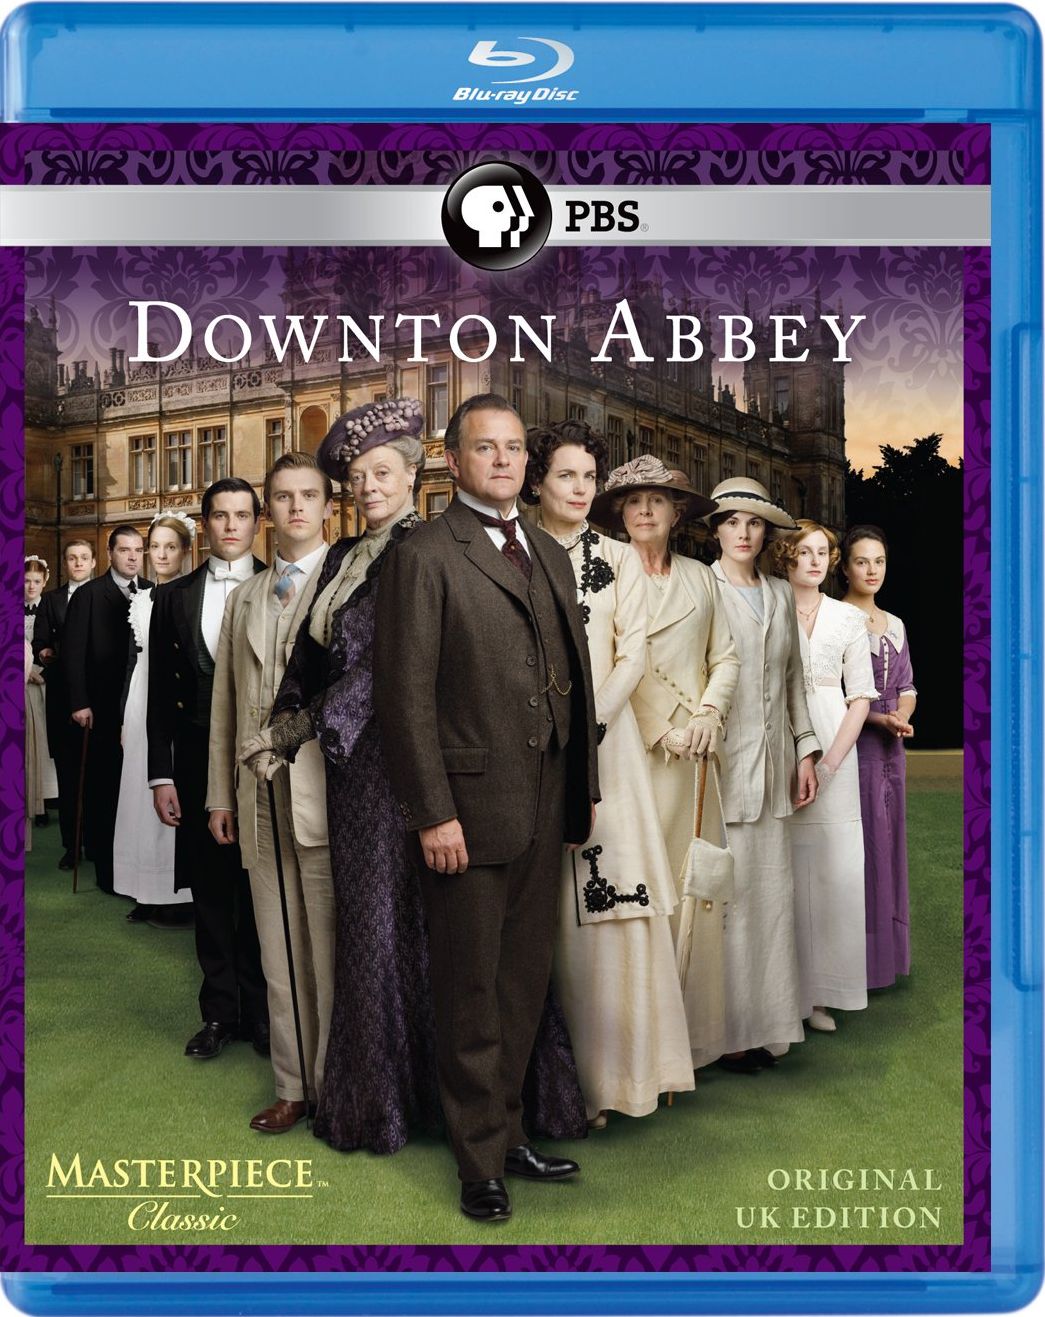 Downton Abbey DVD Release Date1045 x 1317